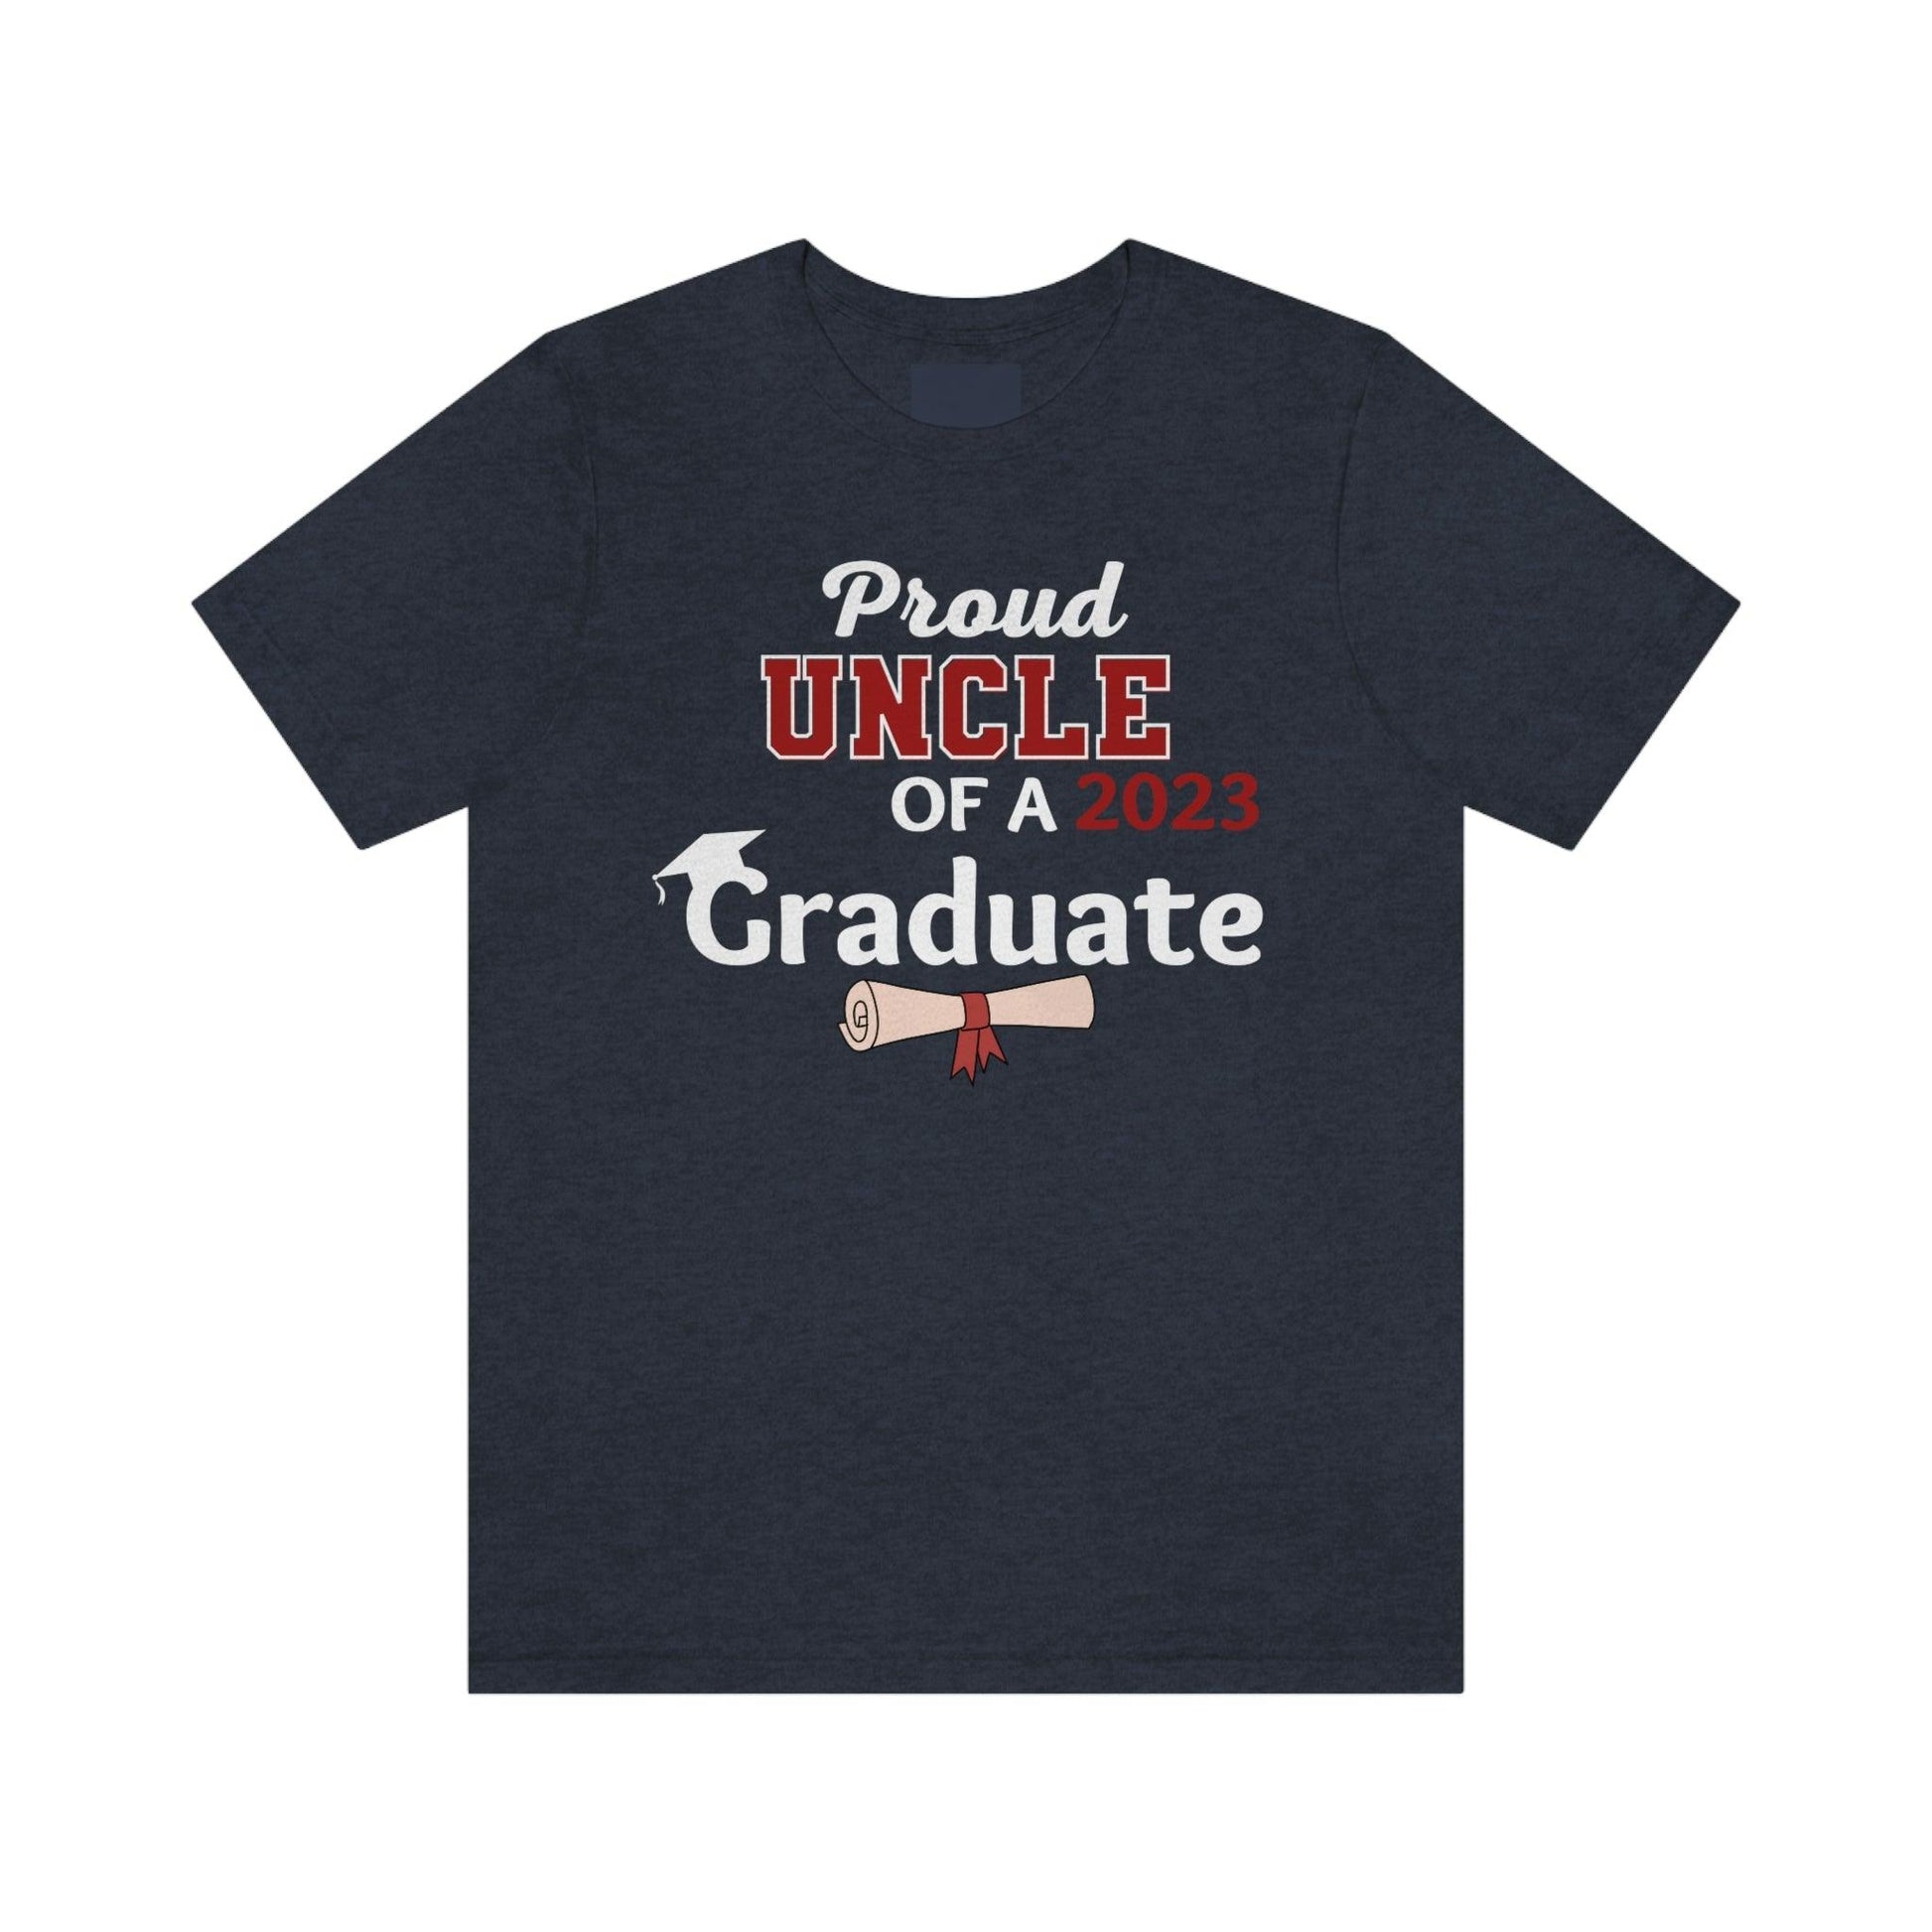 Proud Uncle of a Graduate shirt - Graduation shirt - Graduation gift - Giftsmojo